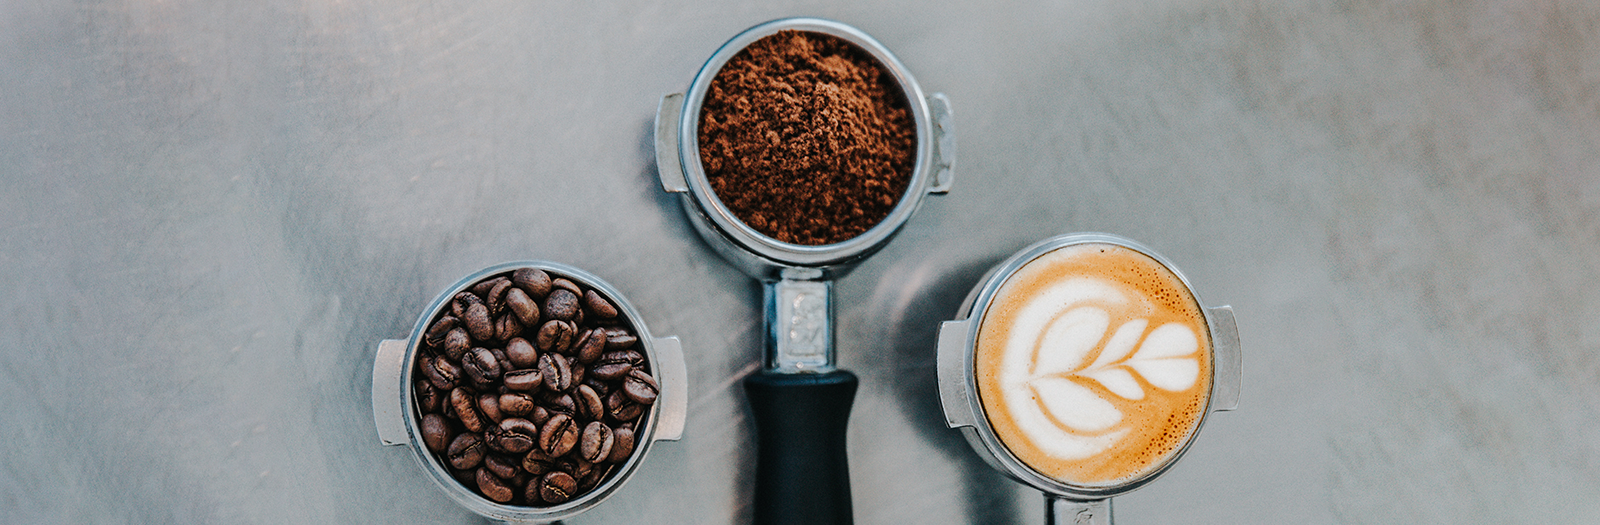 Café latte, ground coffee, coffee beans